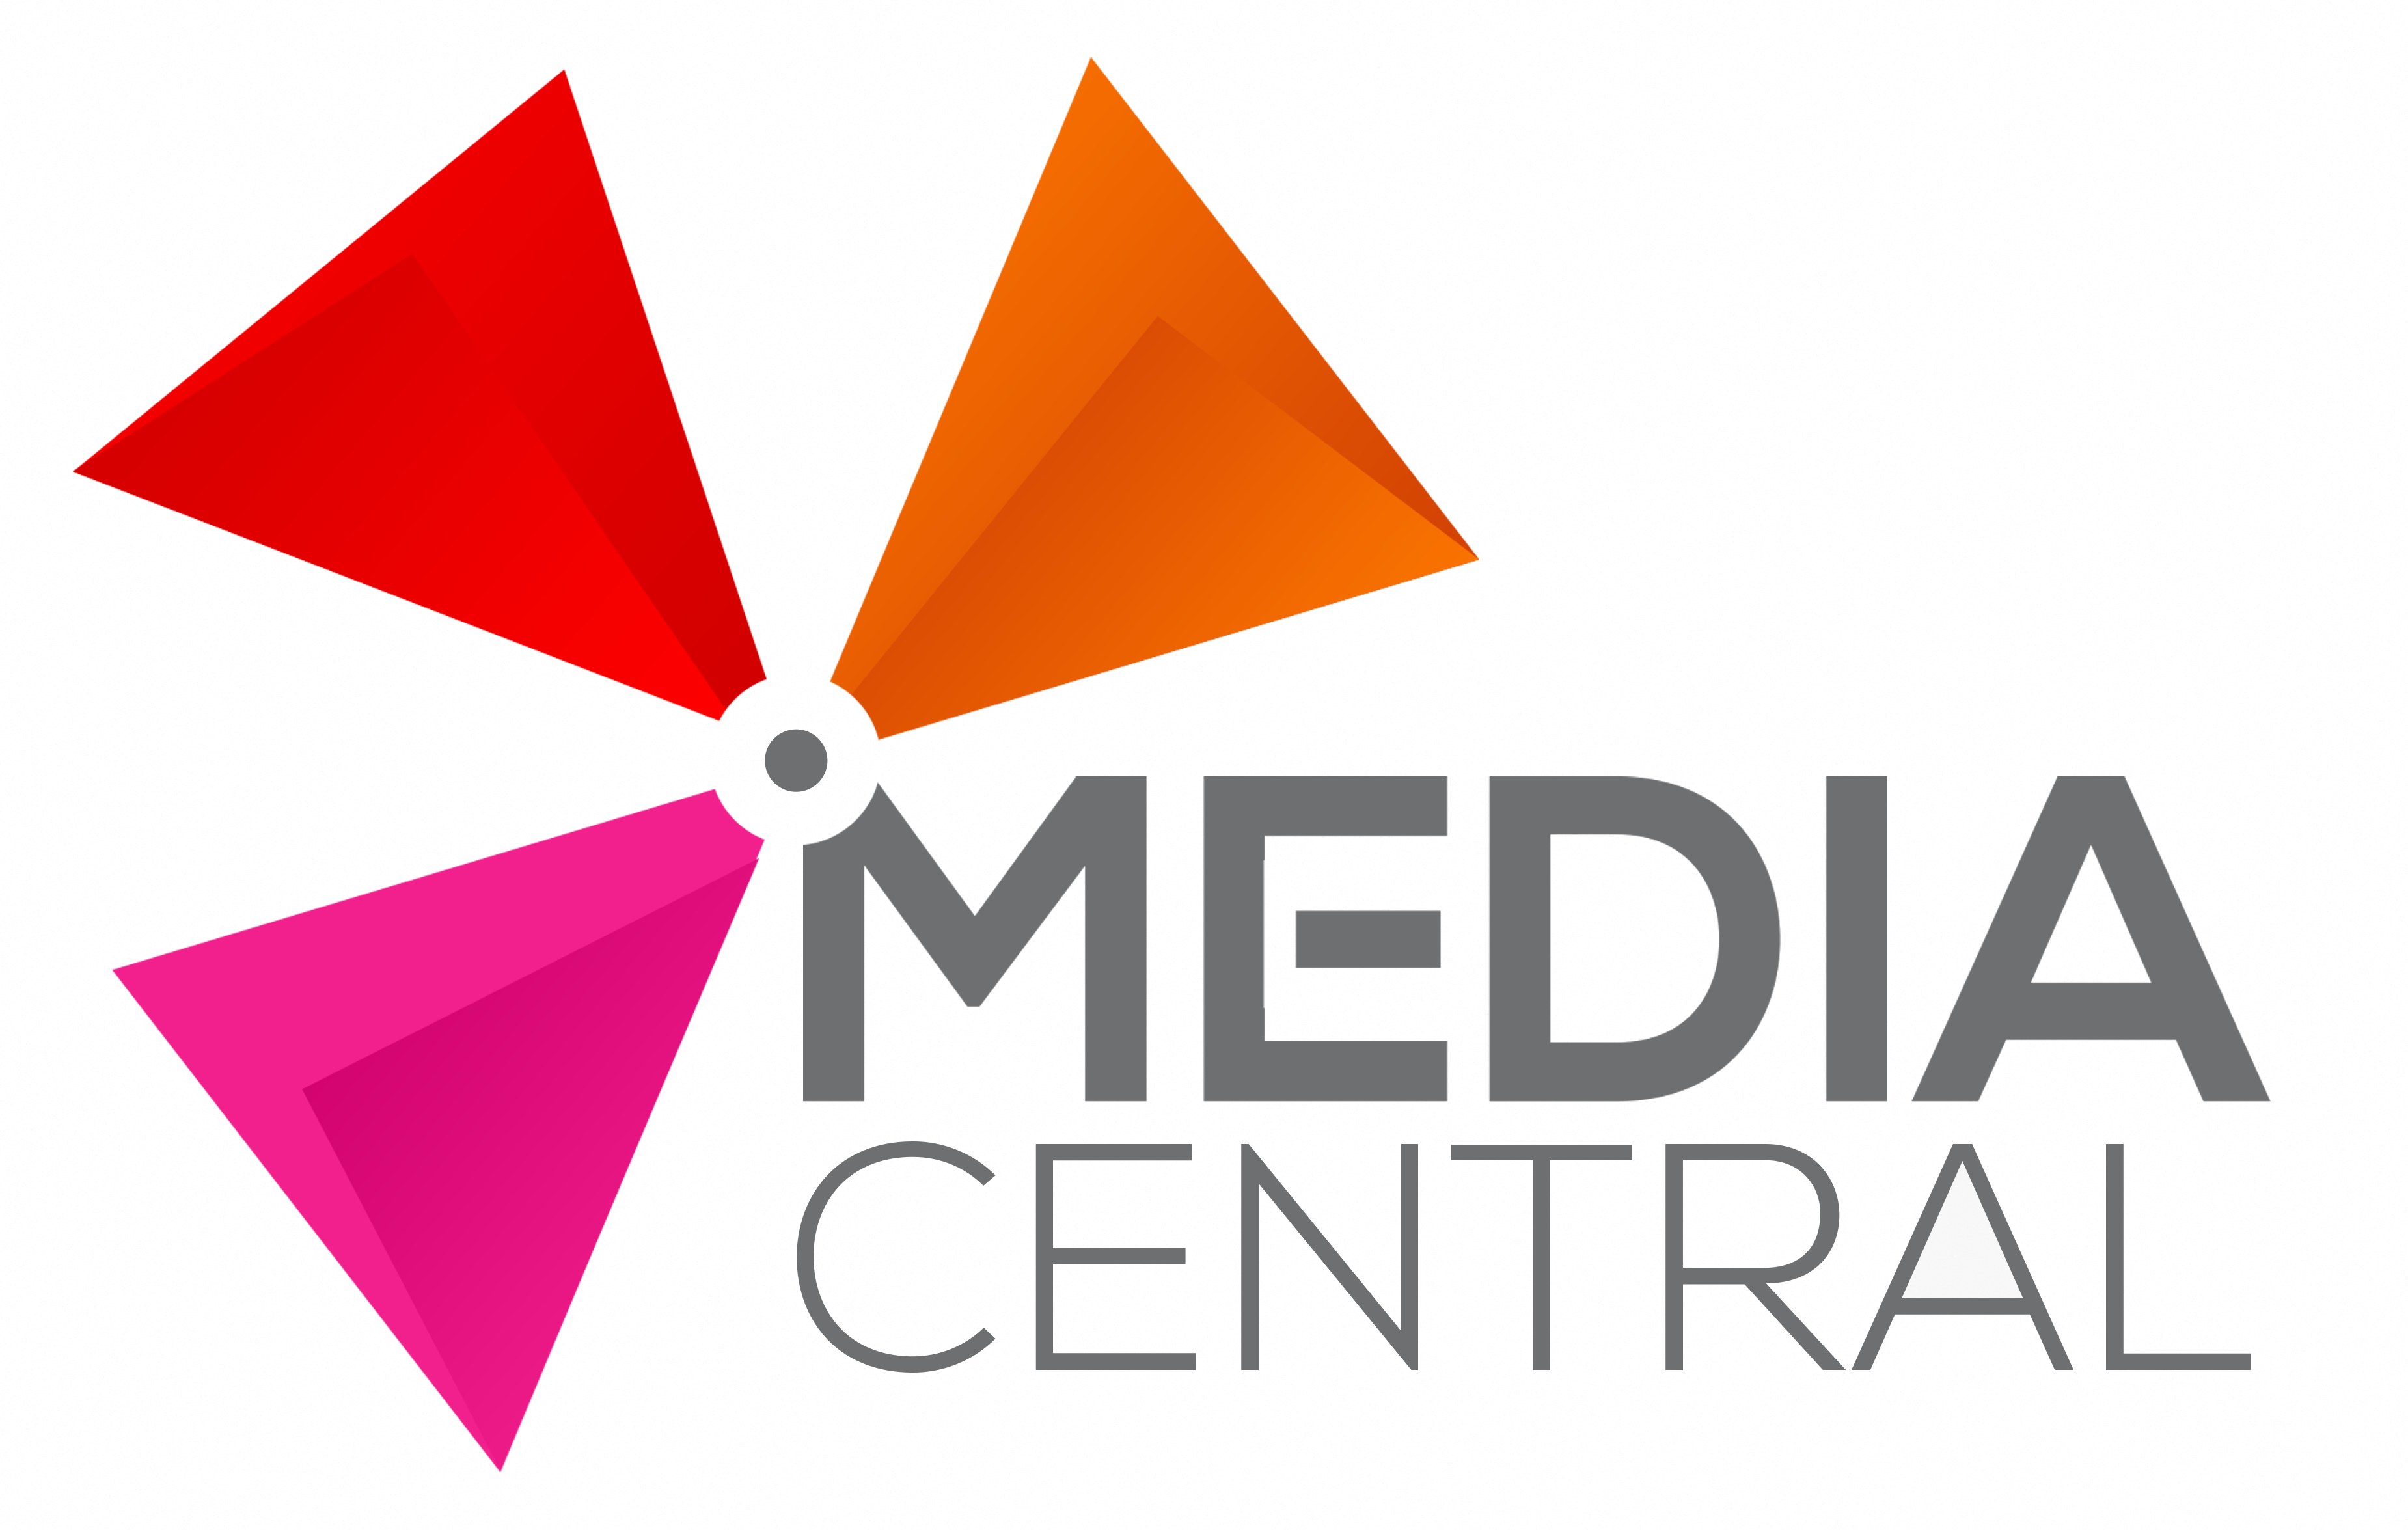 Central Media Logo photo - 1